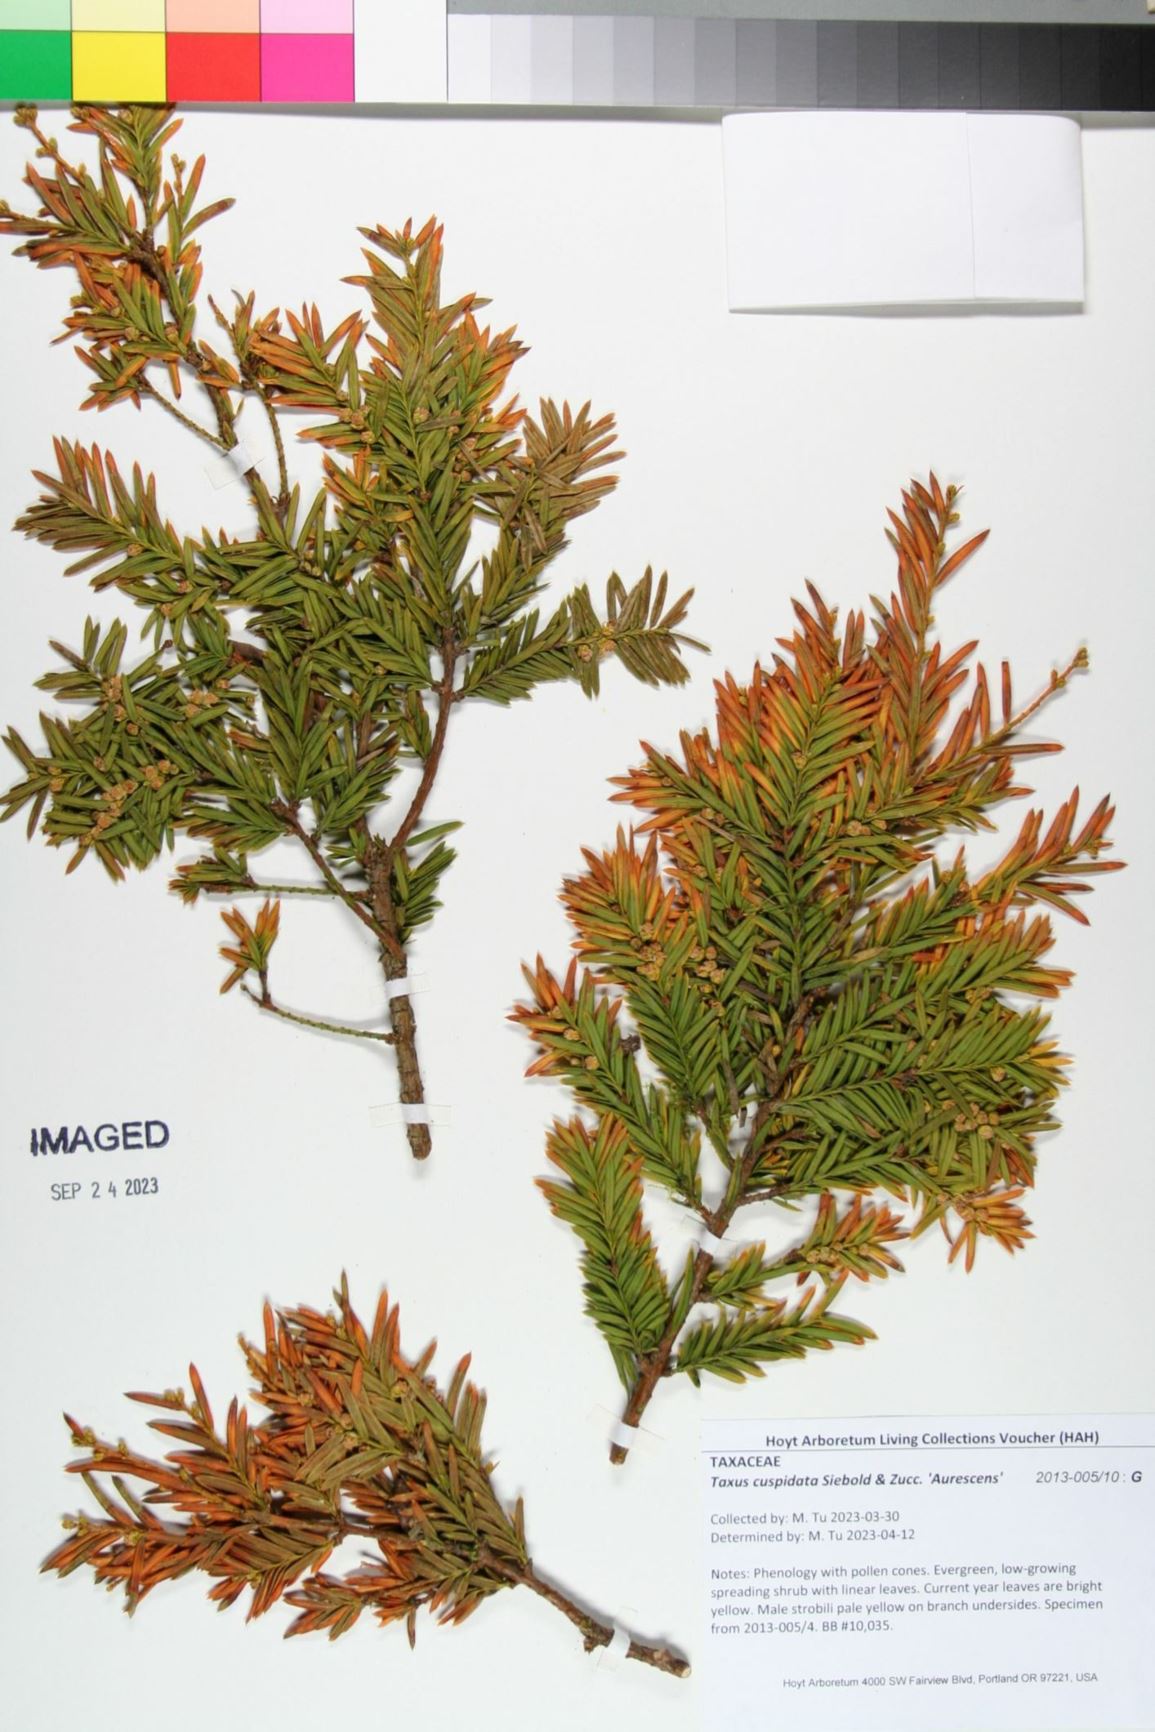 Taxus cuspidata 'Aurescens' - Golden Japanese Yew